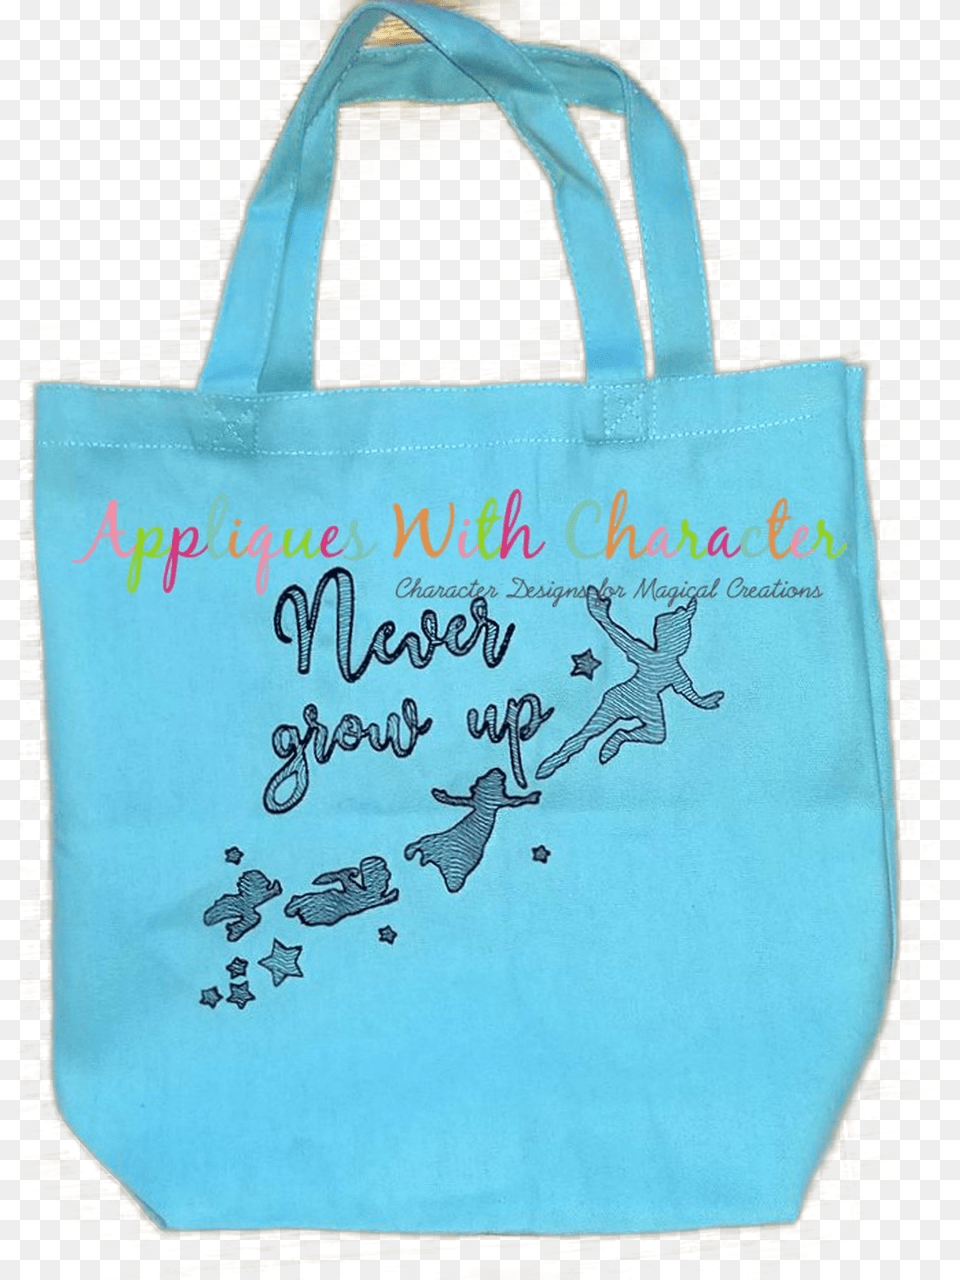 Peter Pan Never Grow Up Bean Stitch Design Tote Bag, Accessories, Handbag, Tote Bag, Purse Free Png